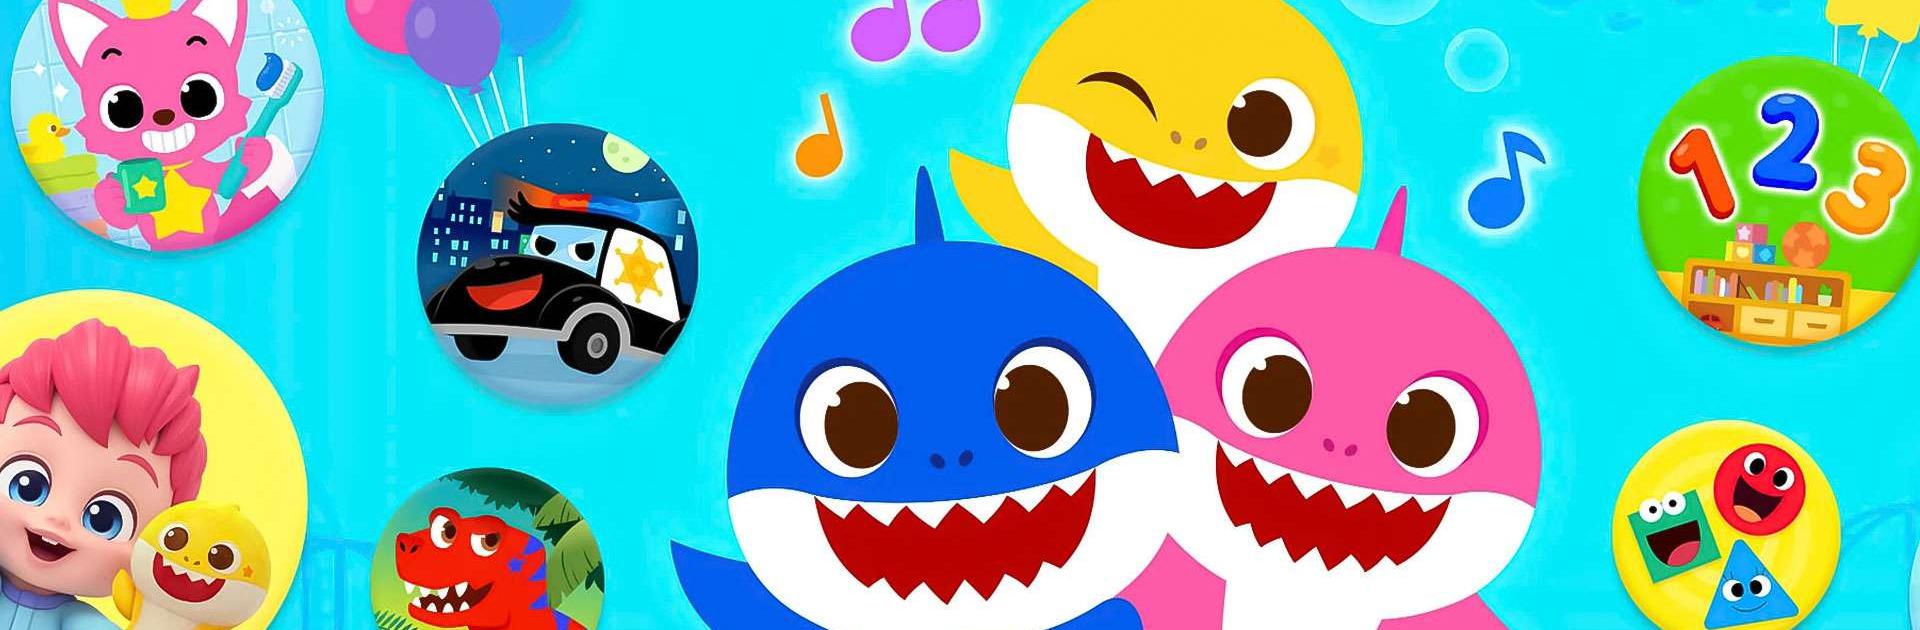 Shark Skill Slotz - Apps on Google Play